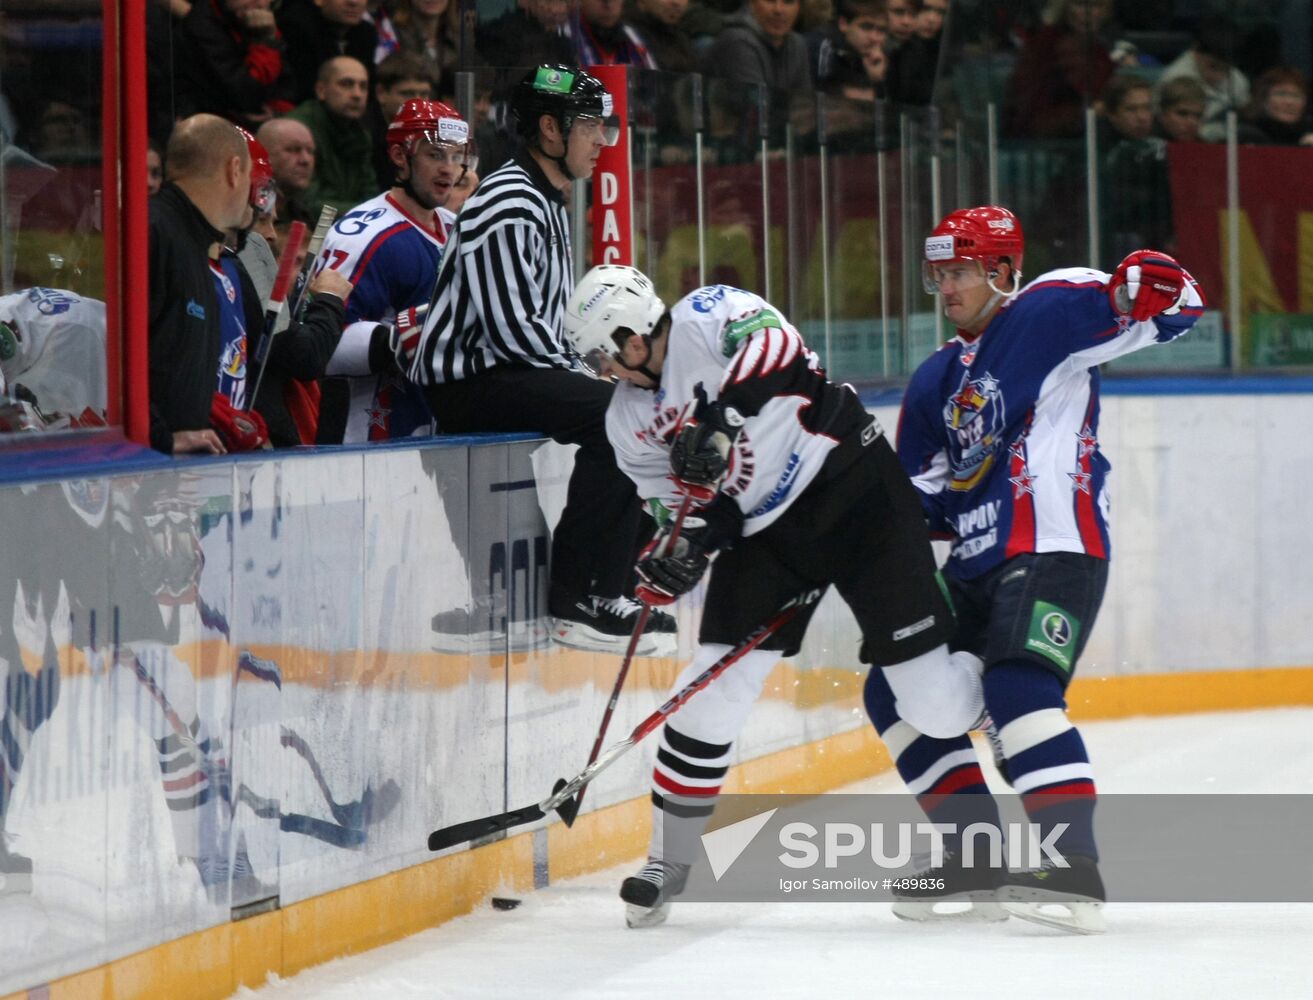 Continental Hockey League: SKA St. Petersburg vs. Avangard Omsk